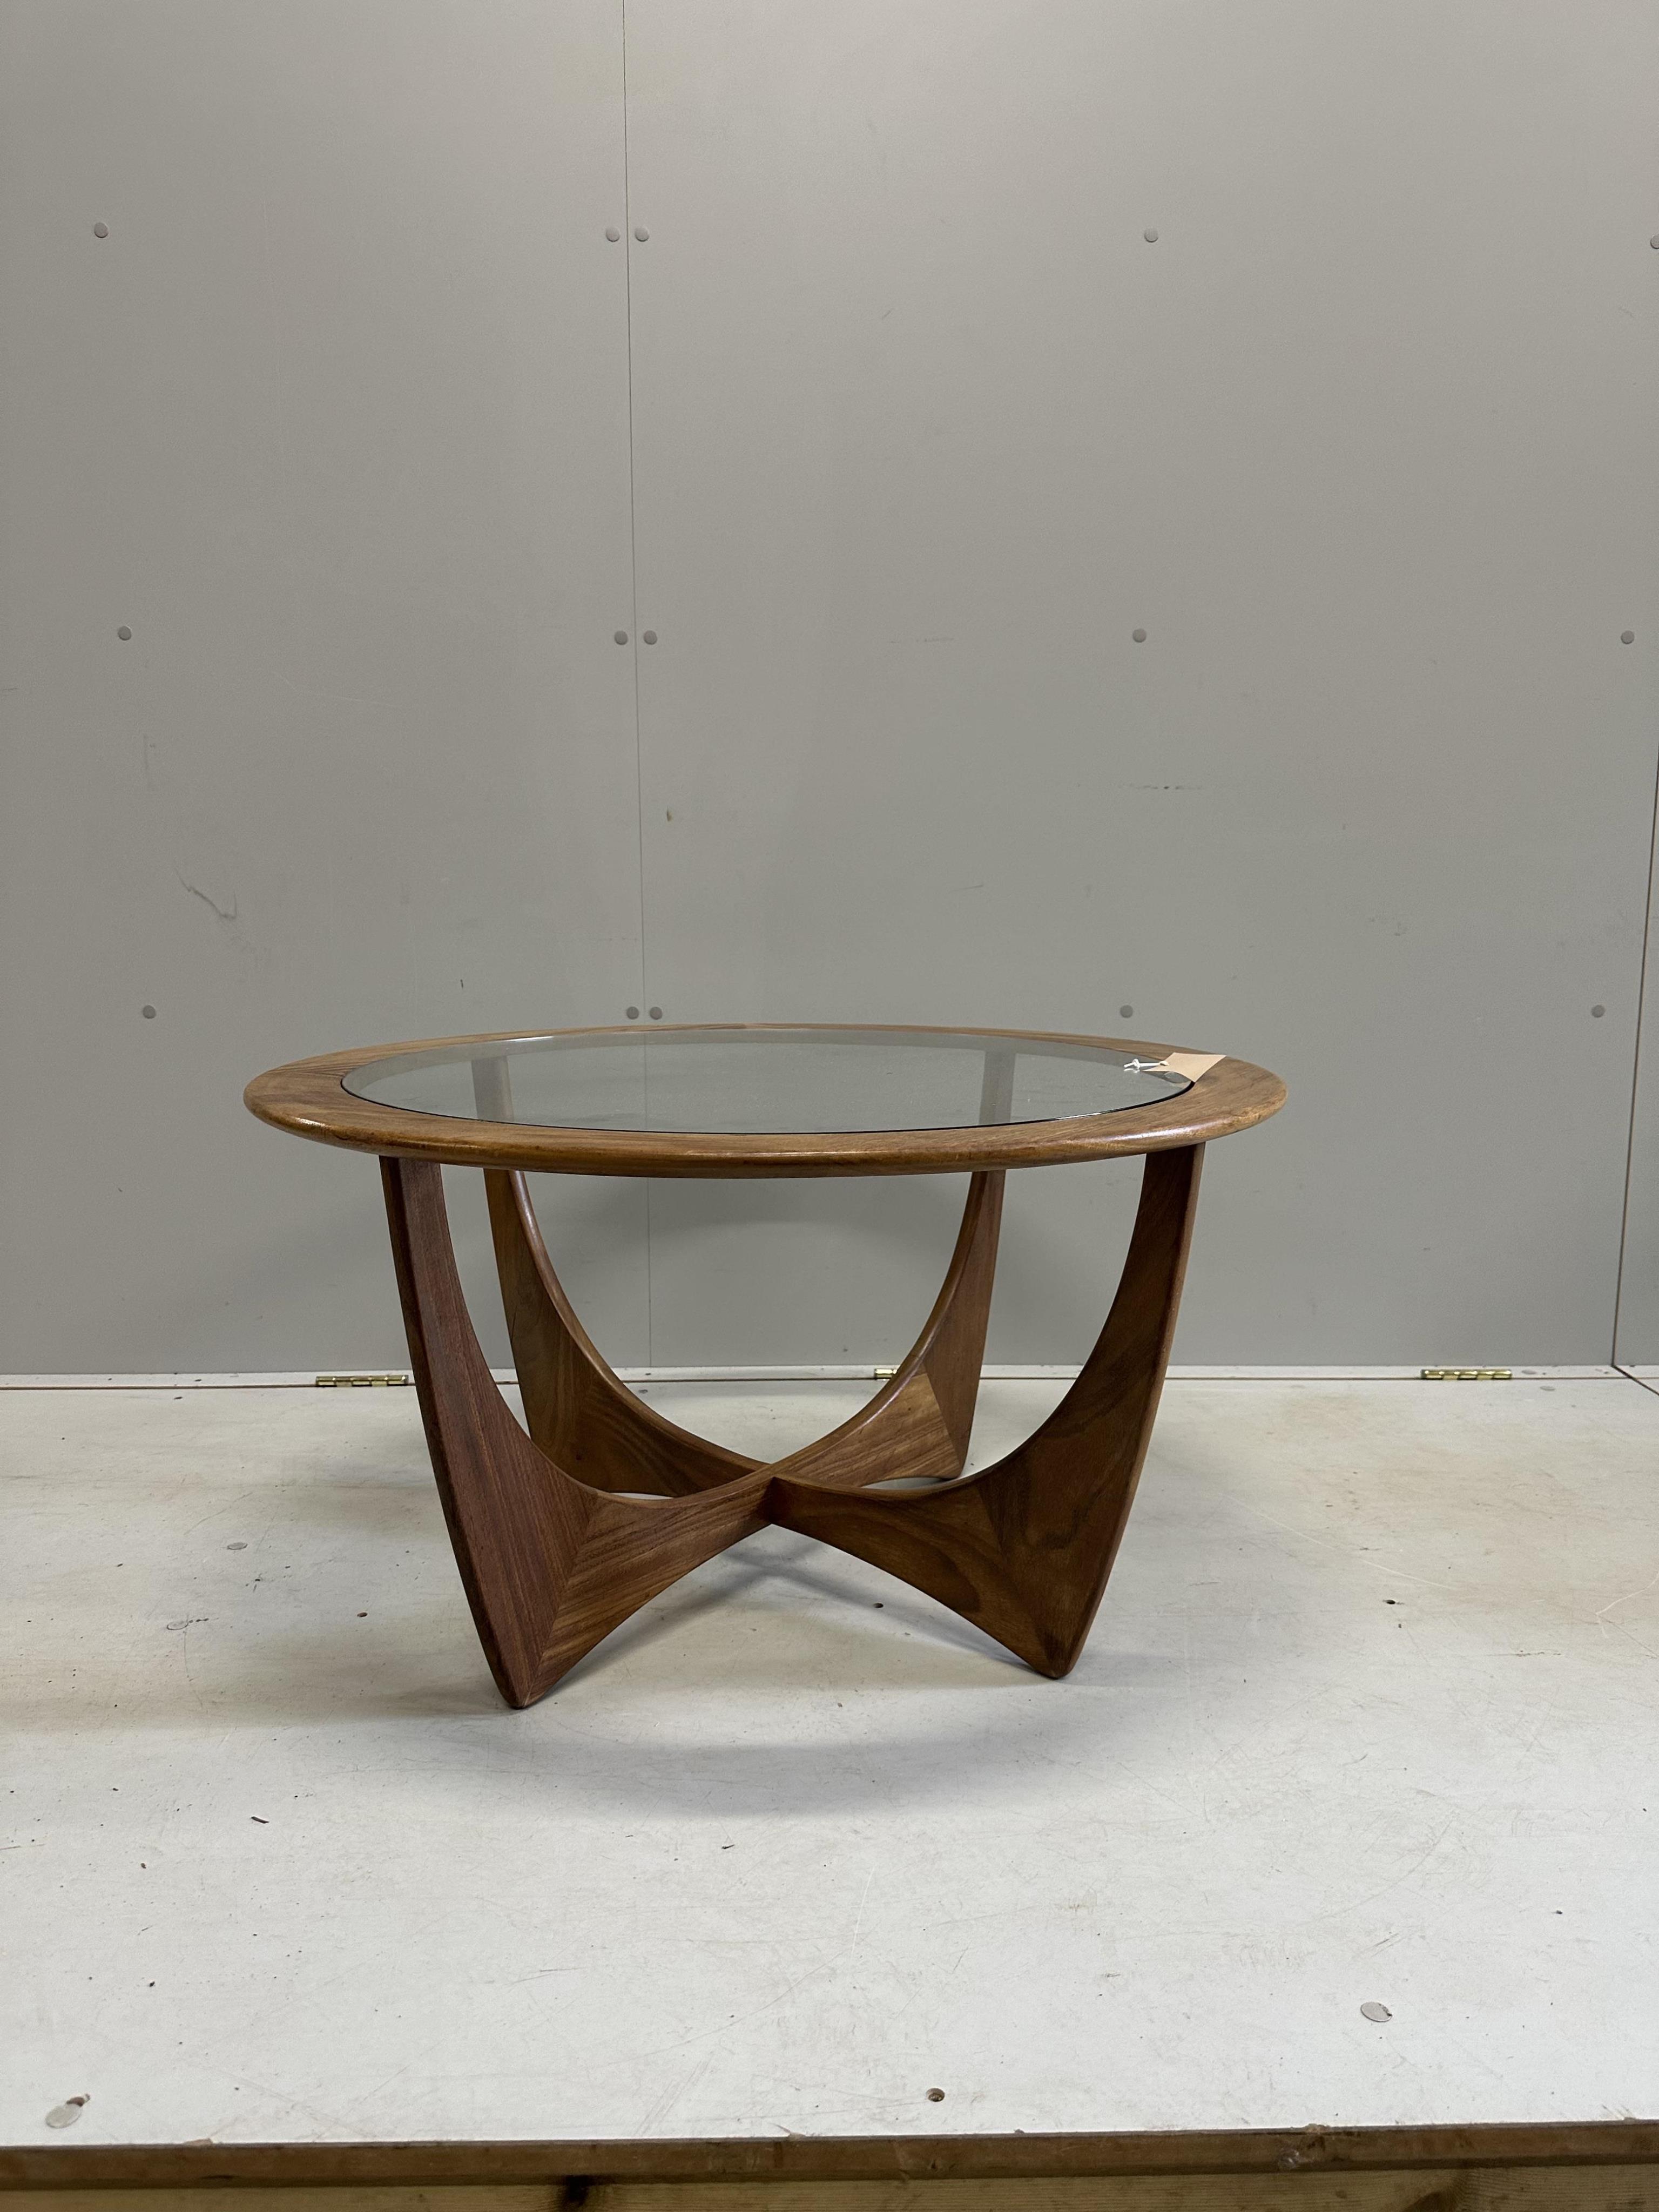 A G Plan teak circular Astro coffee table, diameter 83cm, height 45cm